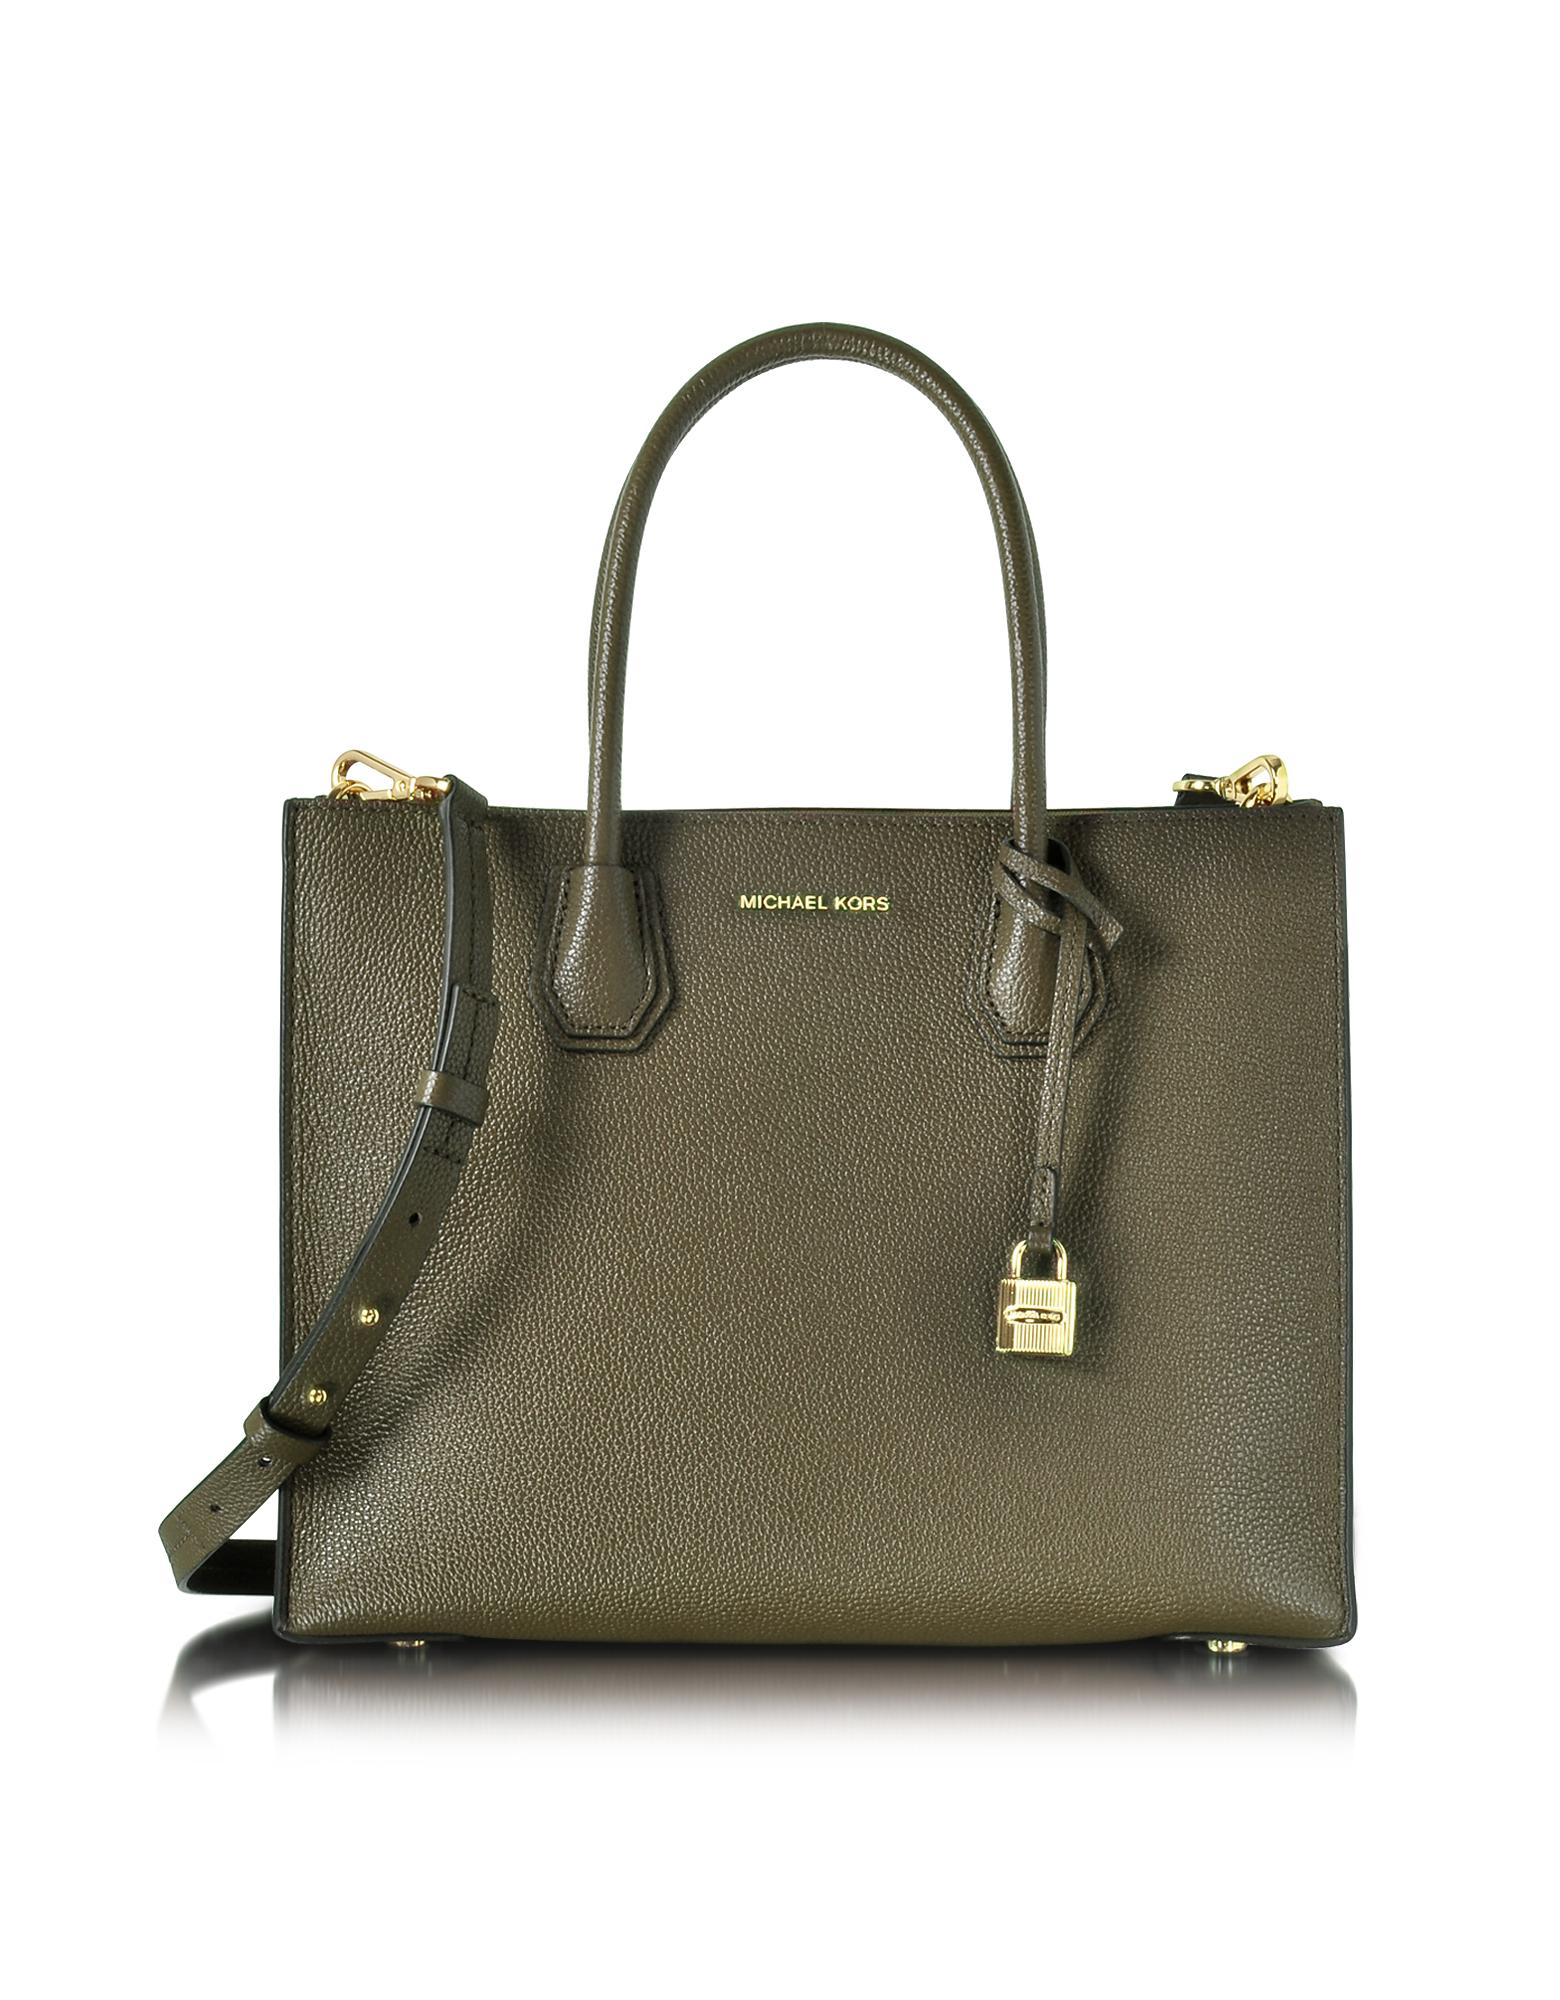 michael kors handbags olive green